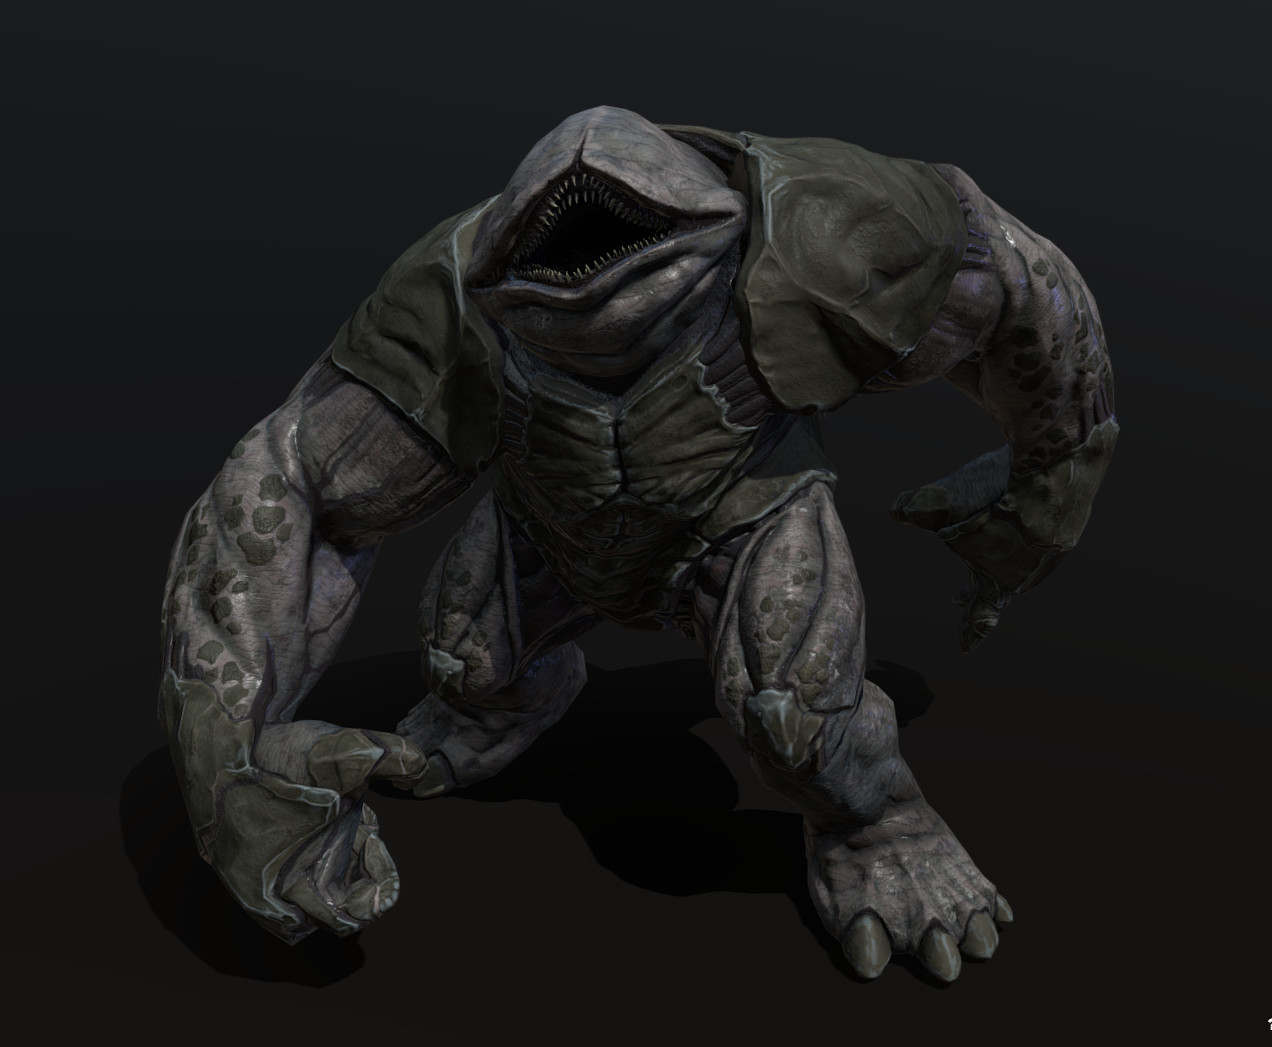 Juggernaut Creature - it's big and hits hard